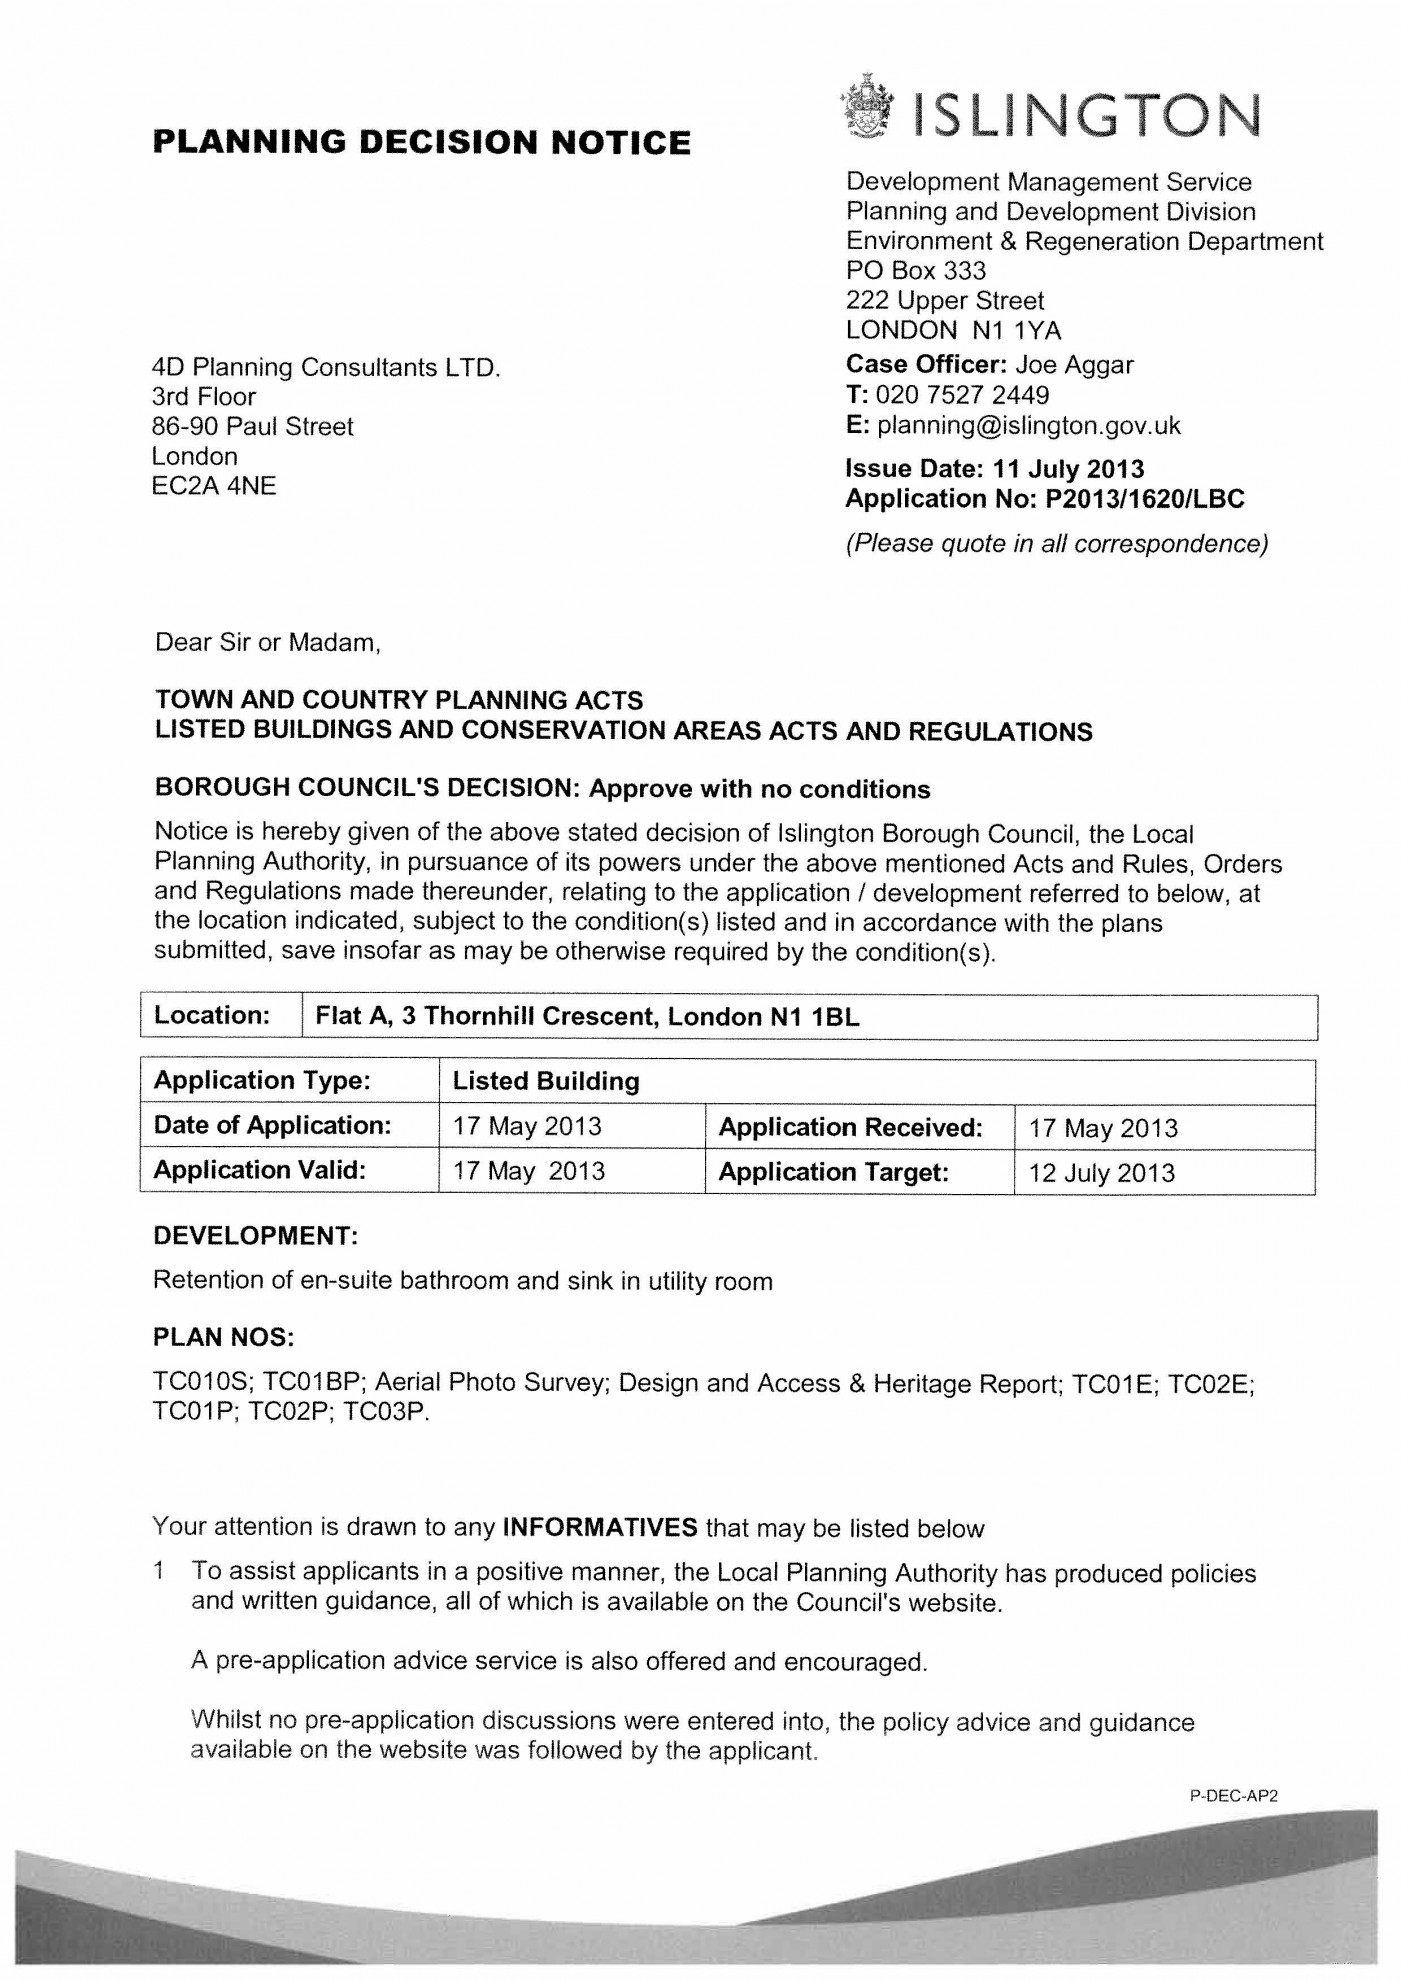 decision notice - Islington Council